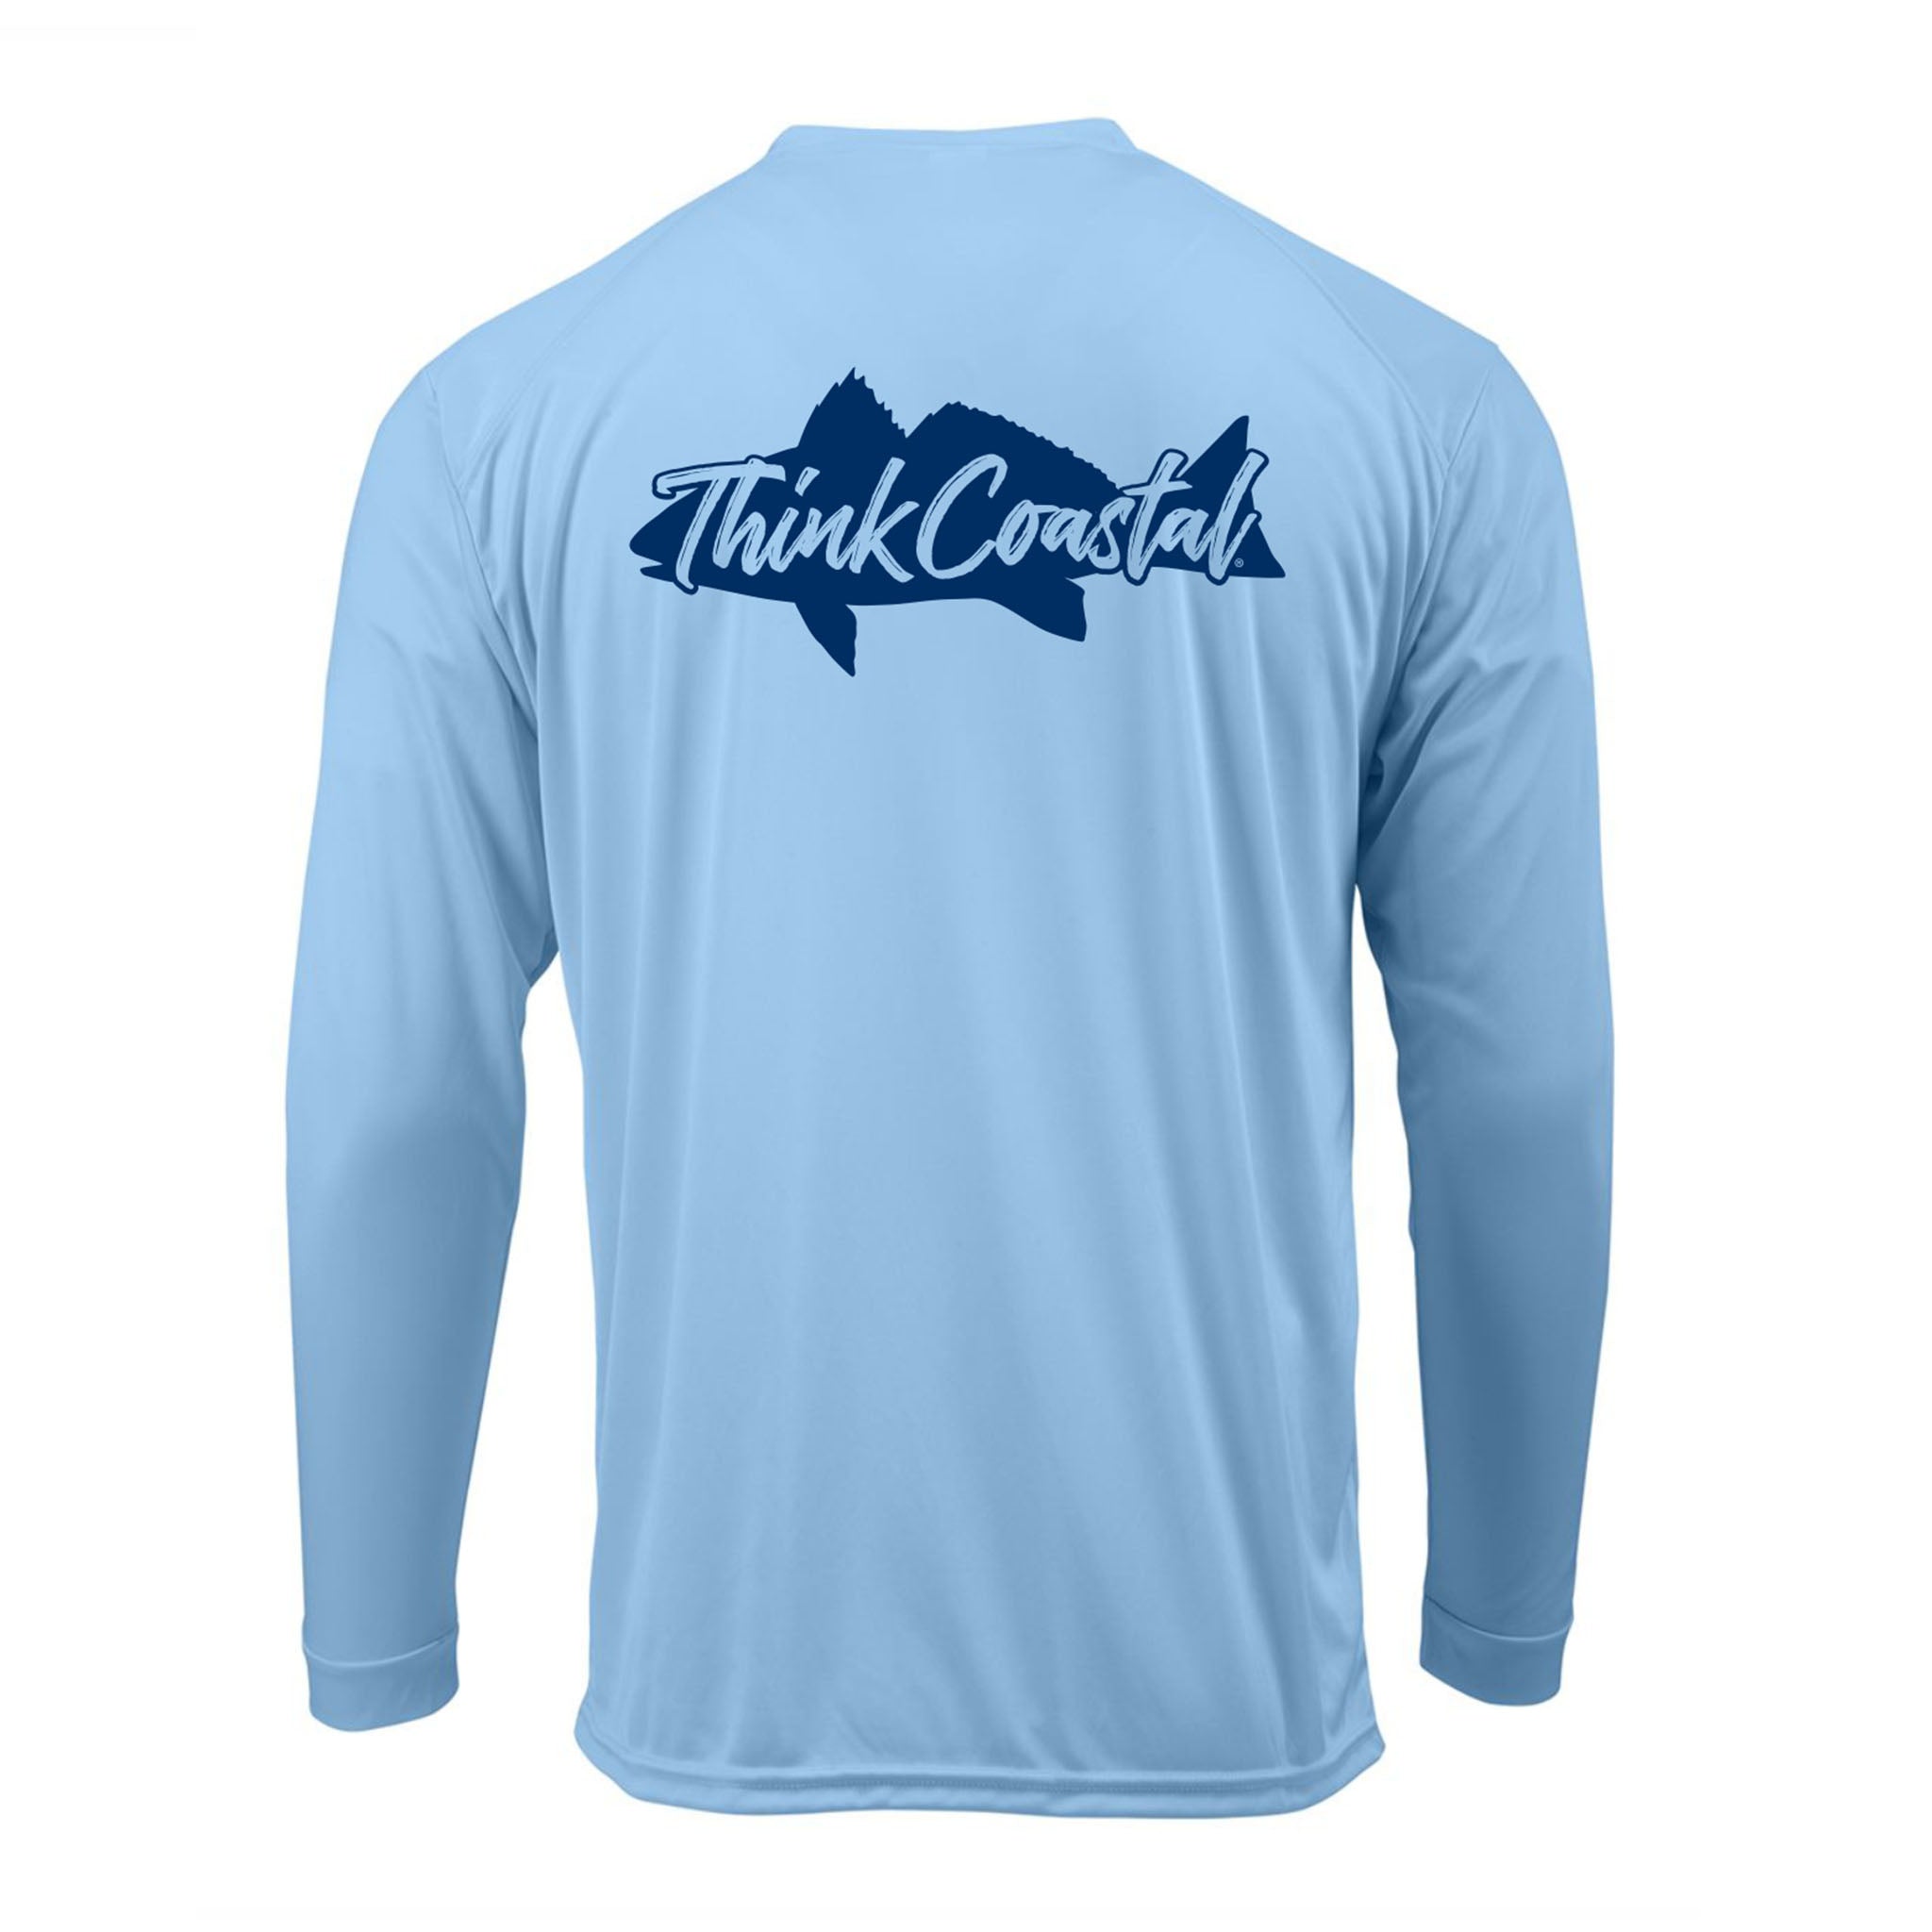 Redfish Performance Shirt - Blue Mist - NC Marine & Estuary Foundation